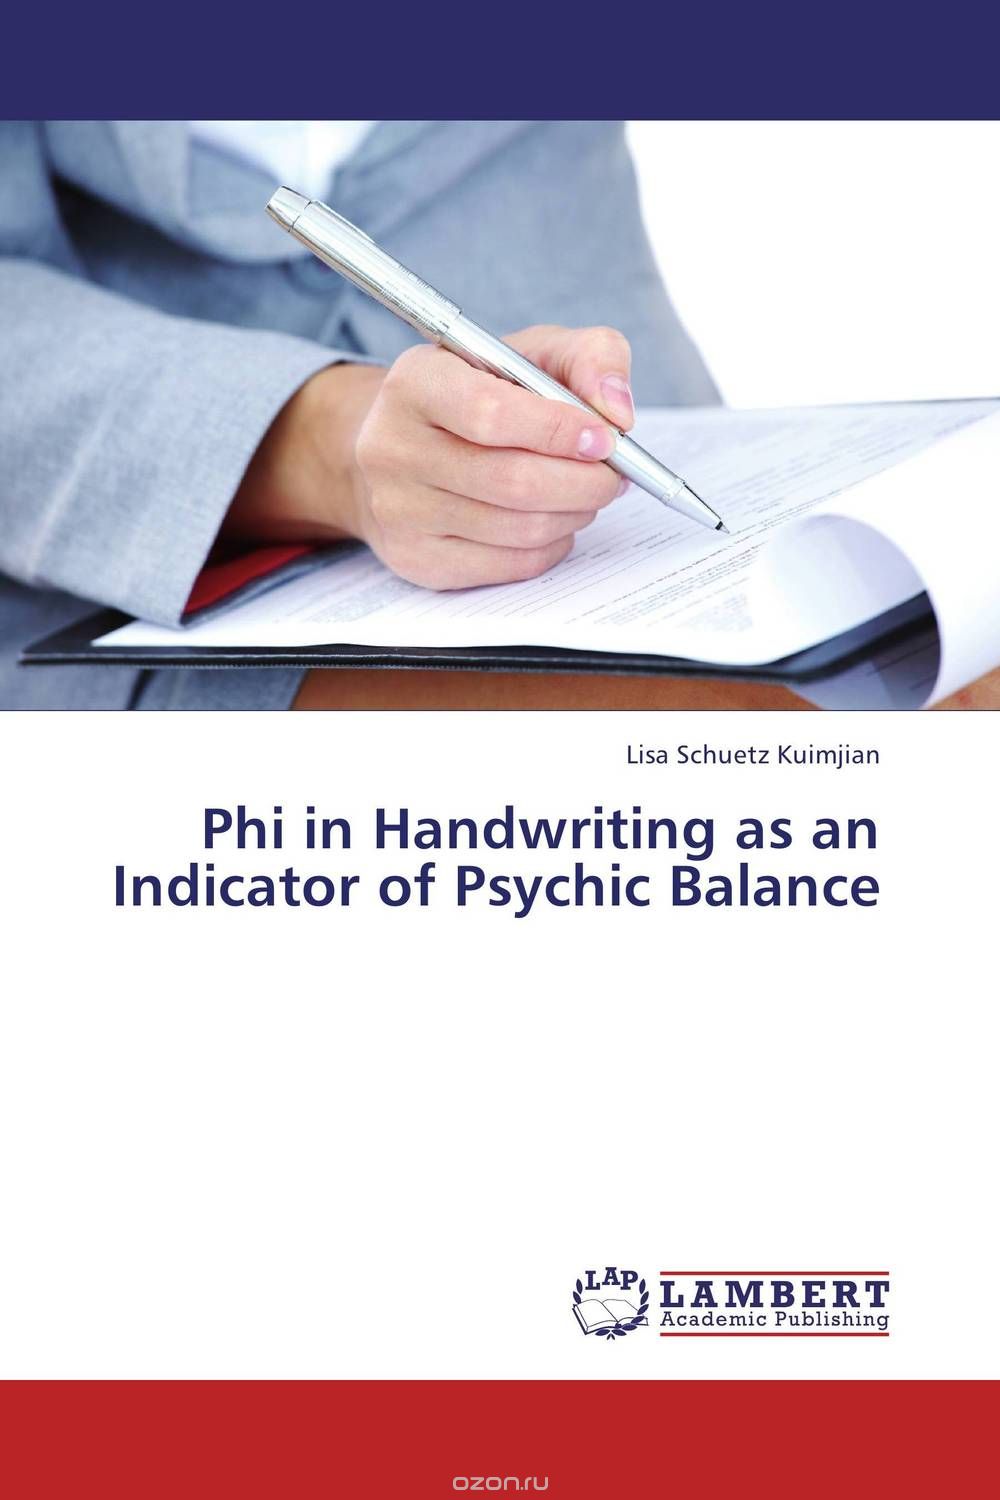 Скачать книгу "Phi in Handwriting as an Indicator of Psychic Balance"